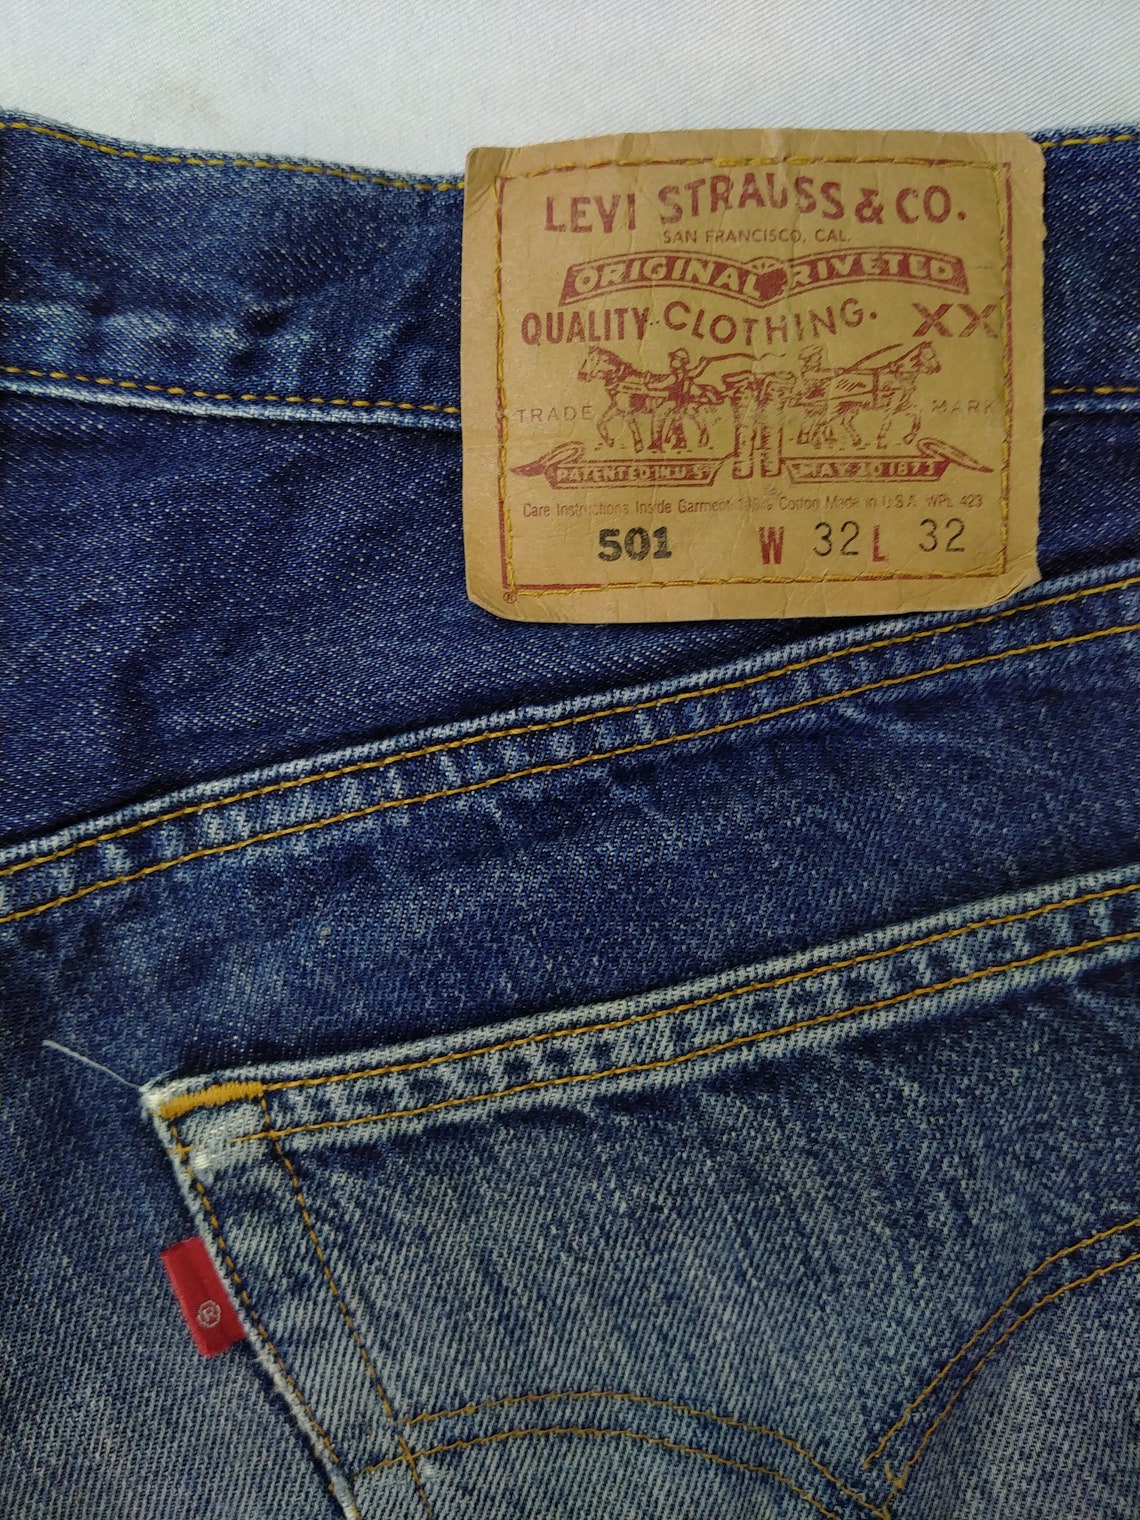 90s Vintage Levi's 503 Patch Distressed Denim 31x31.5 Red | Etsy